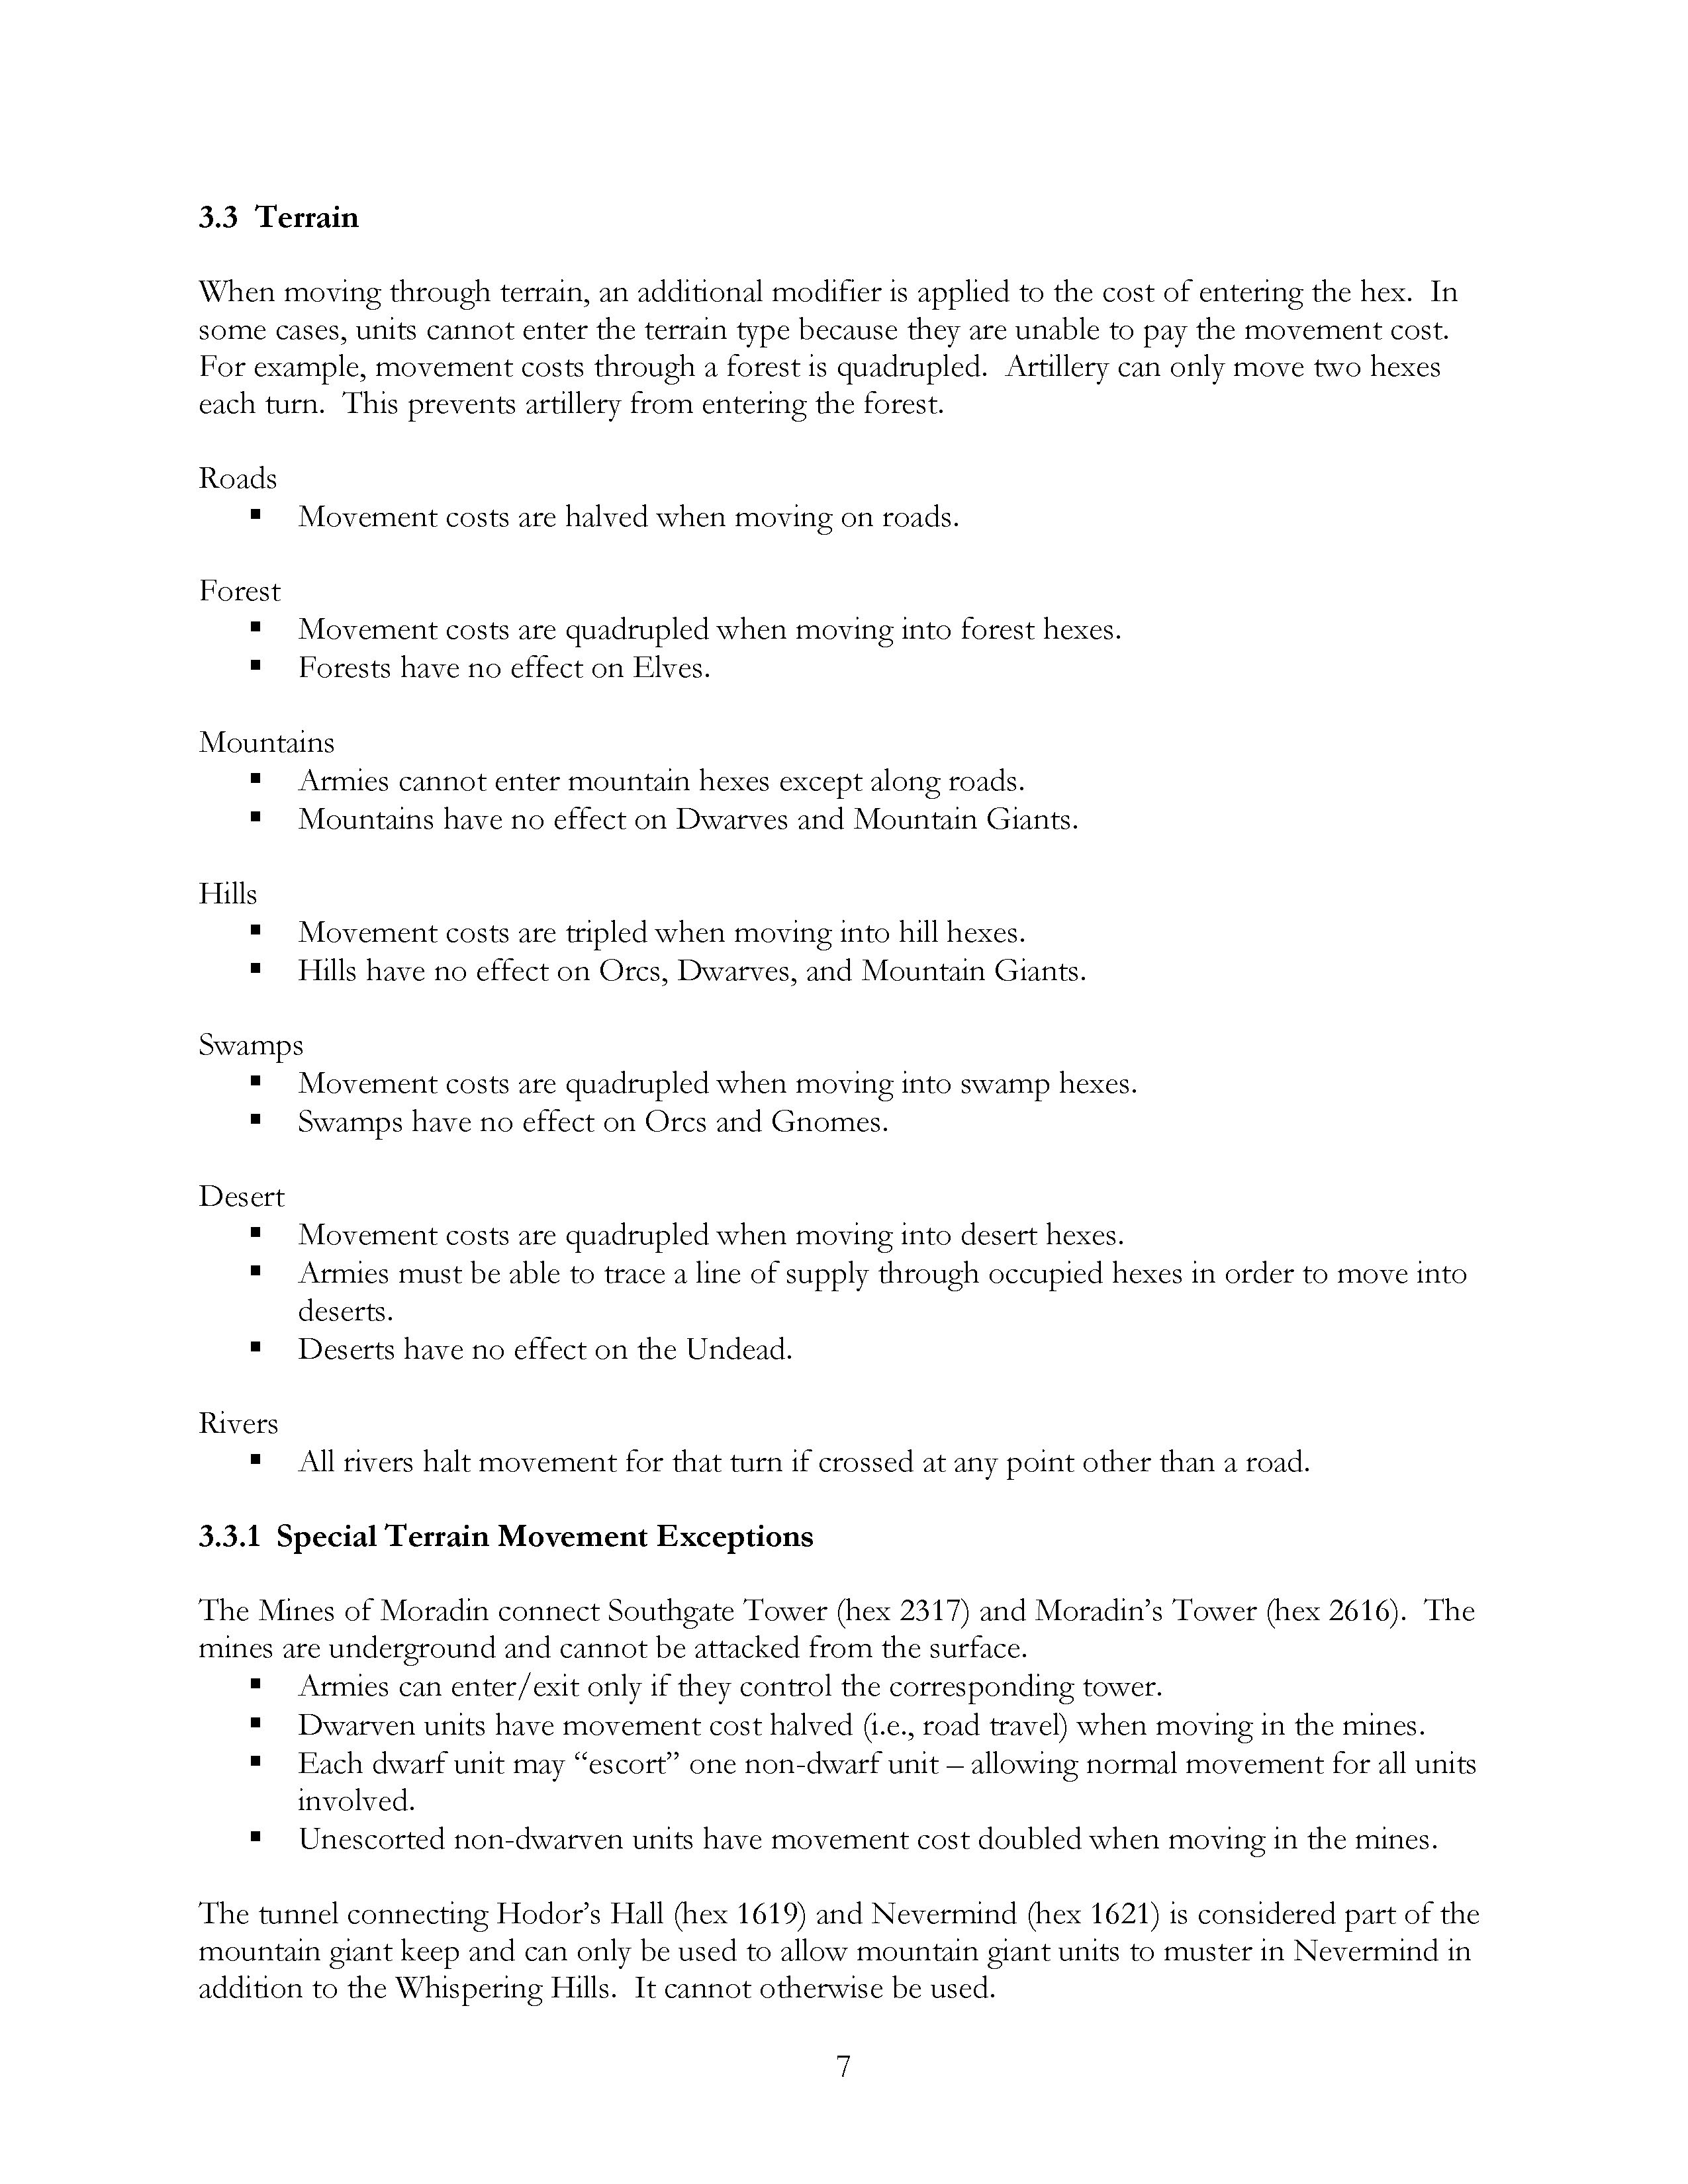 Witenagemot Rules 9 Page 08.jpg